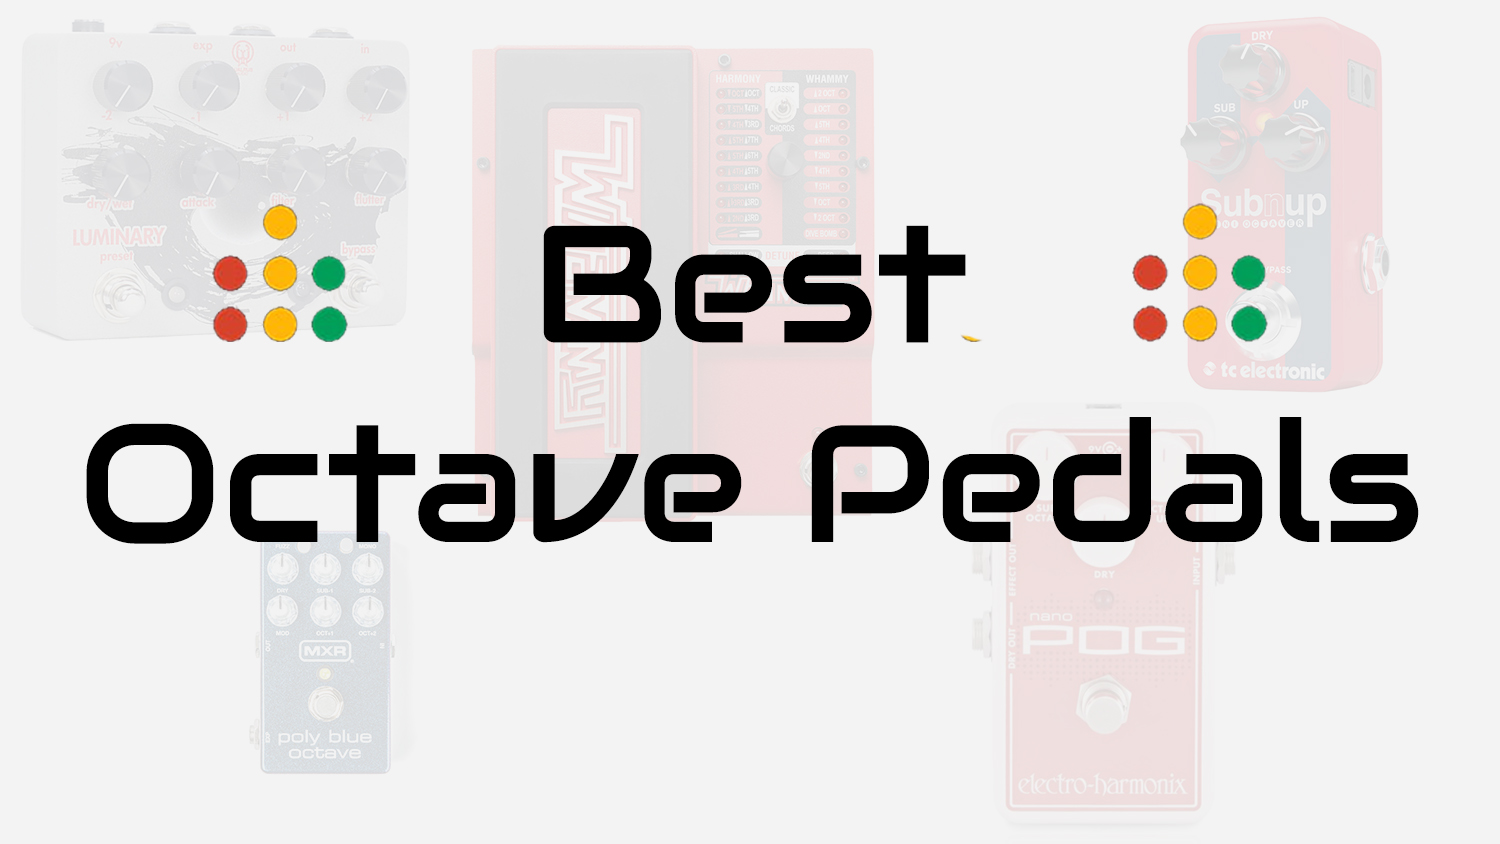 best octave pedals